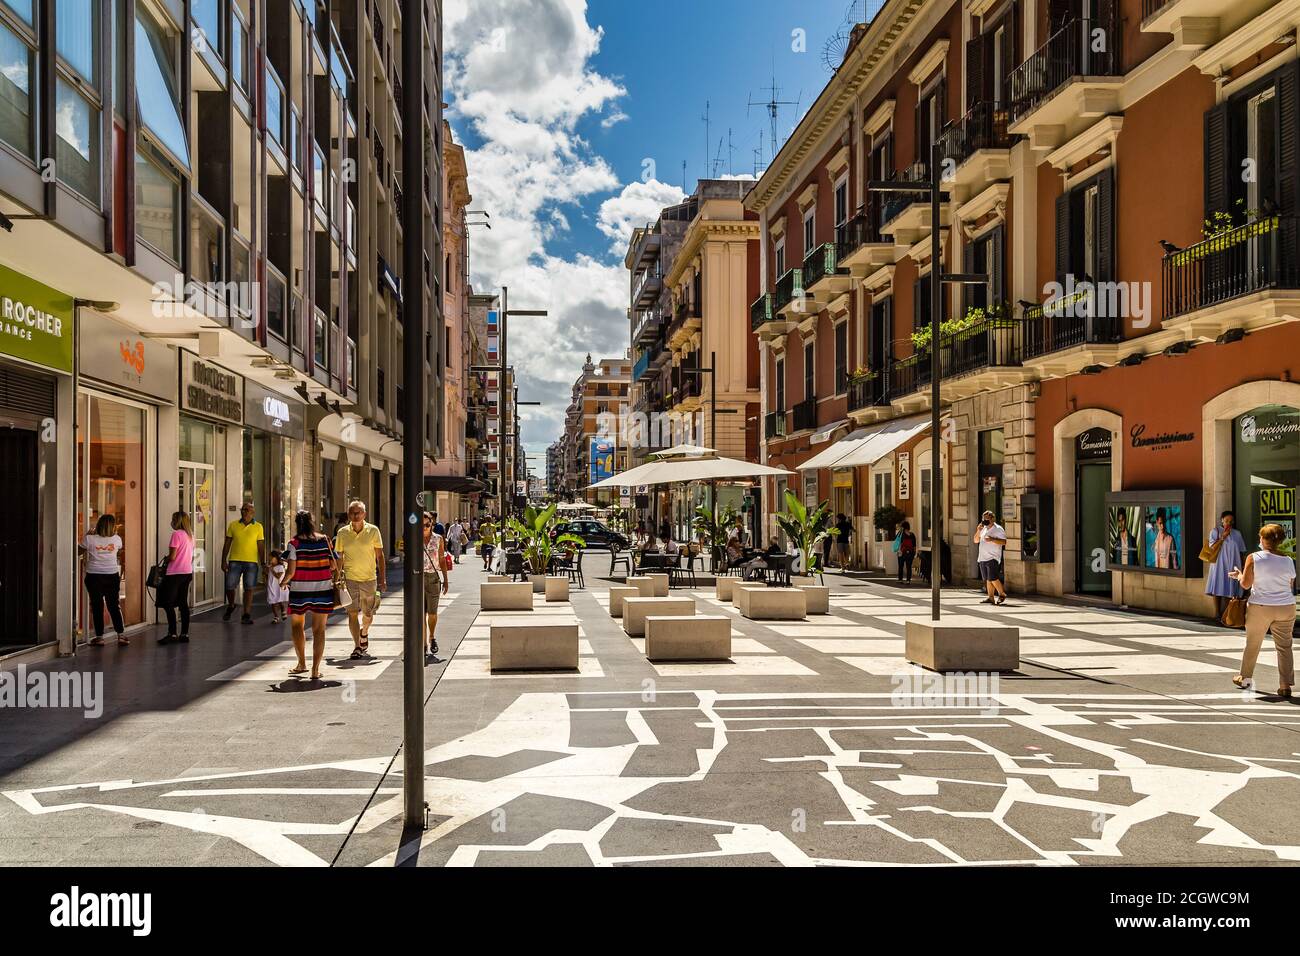 BARI, ITALY - SEPTEMBER 1, 2020: tourists walking in the street of Bari Vecchia Stock Photo